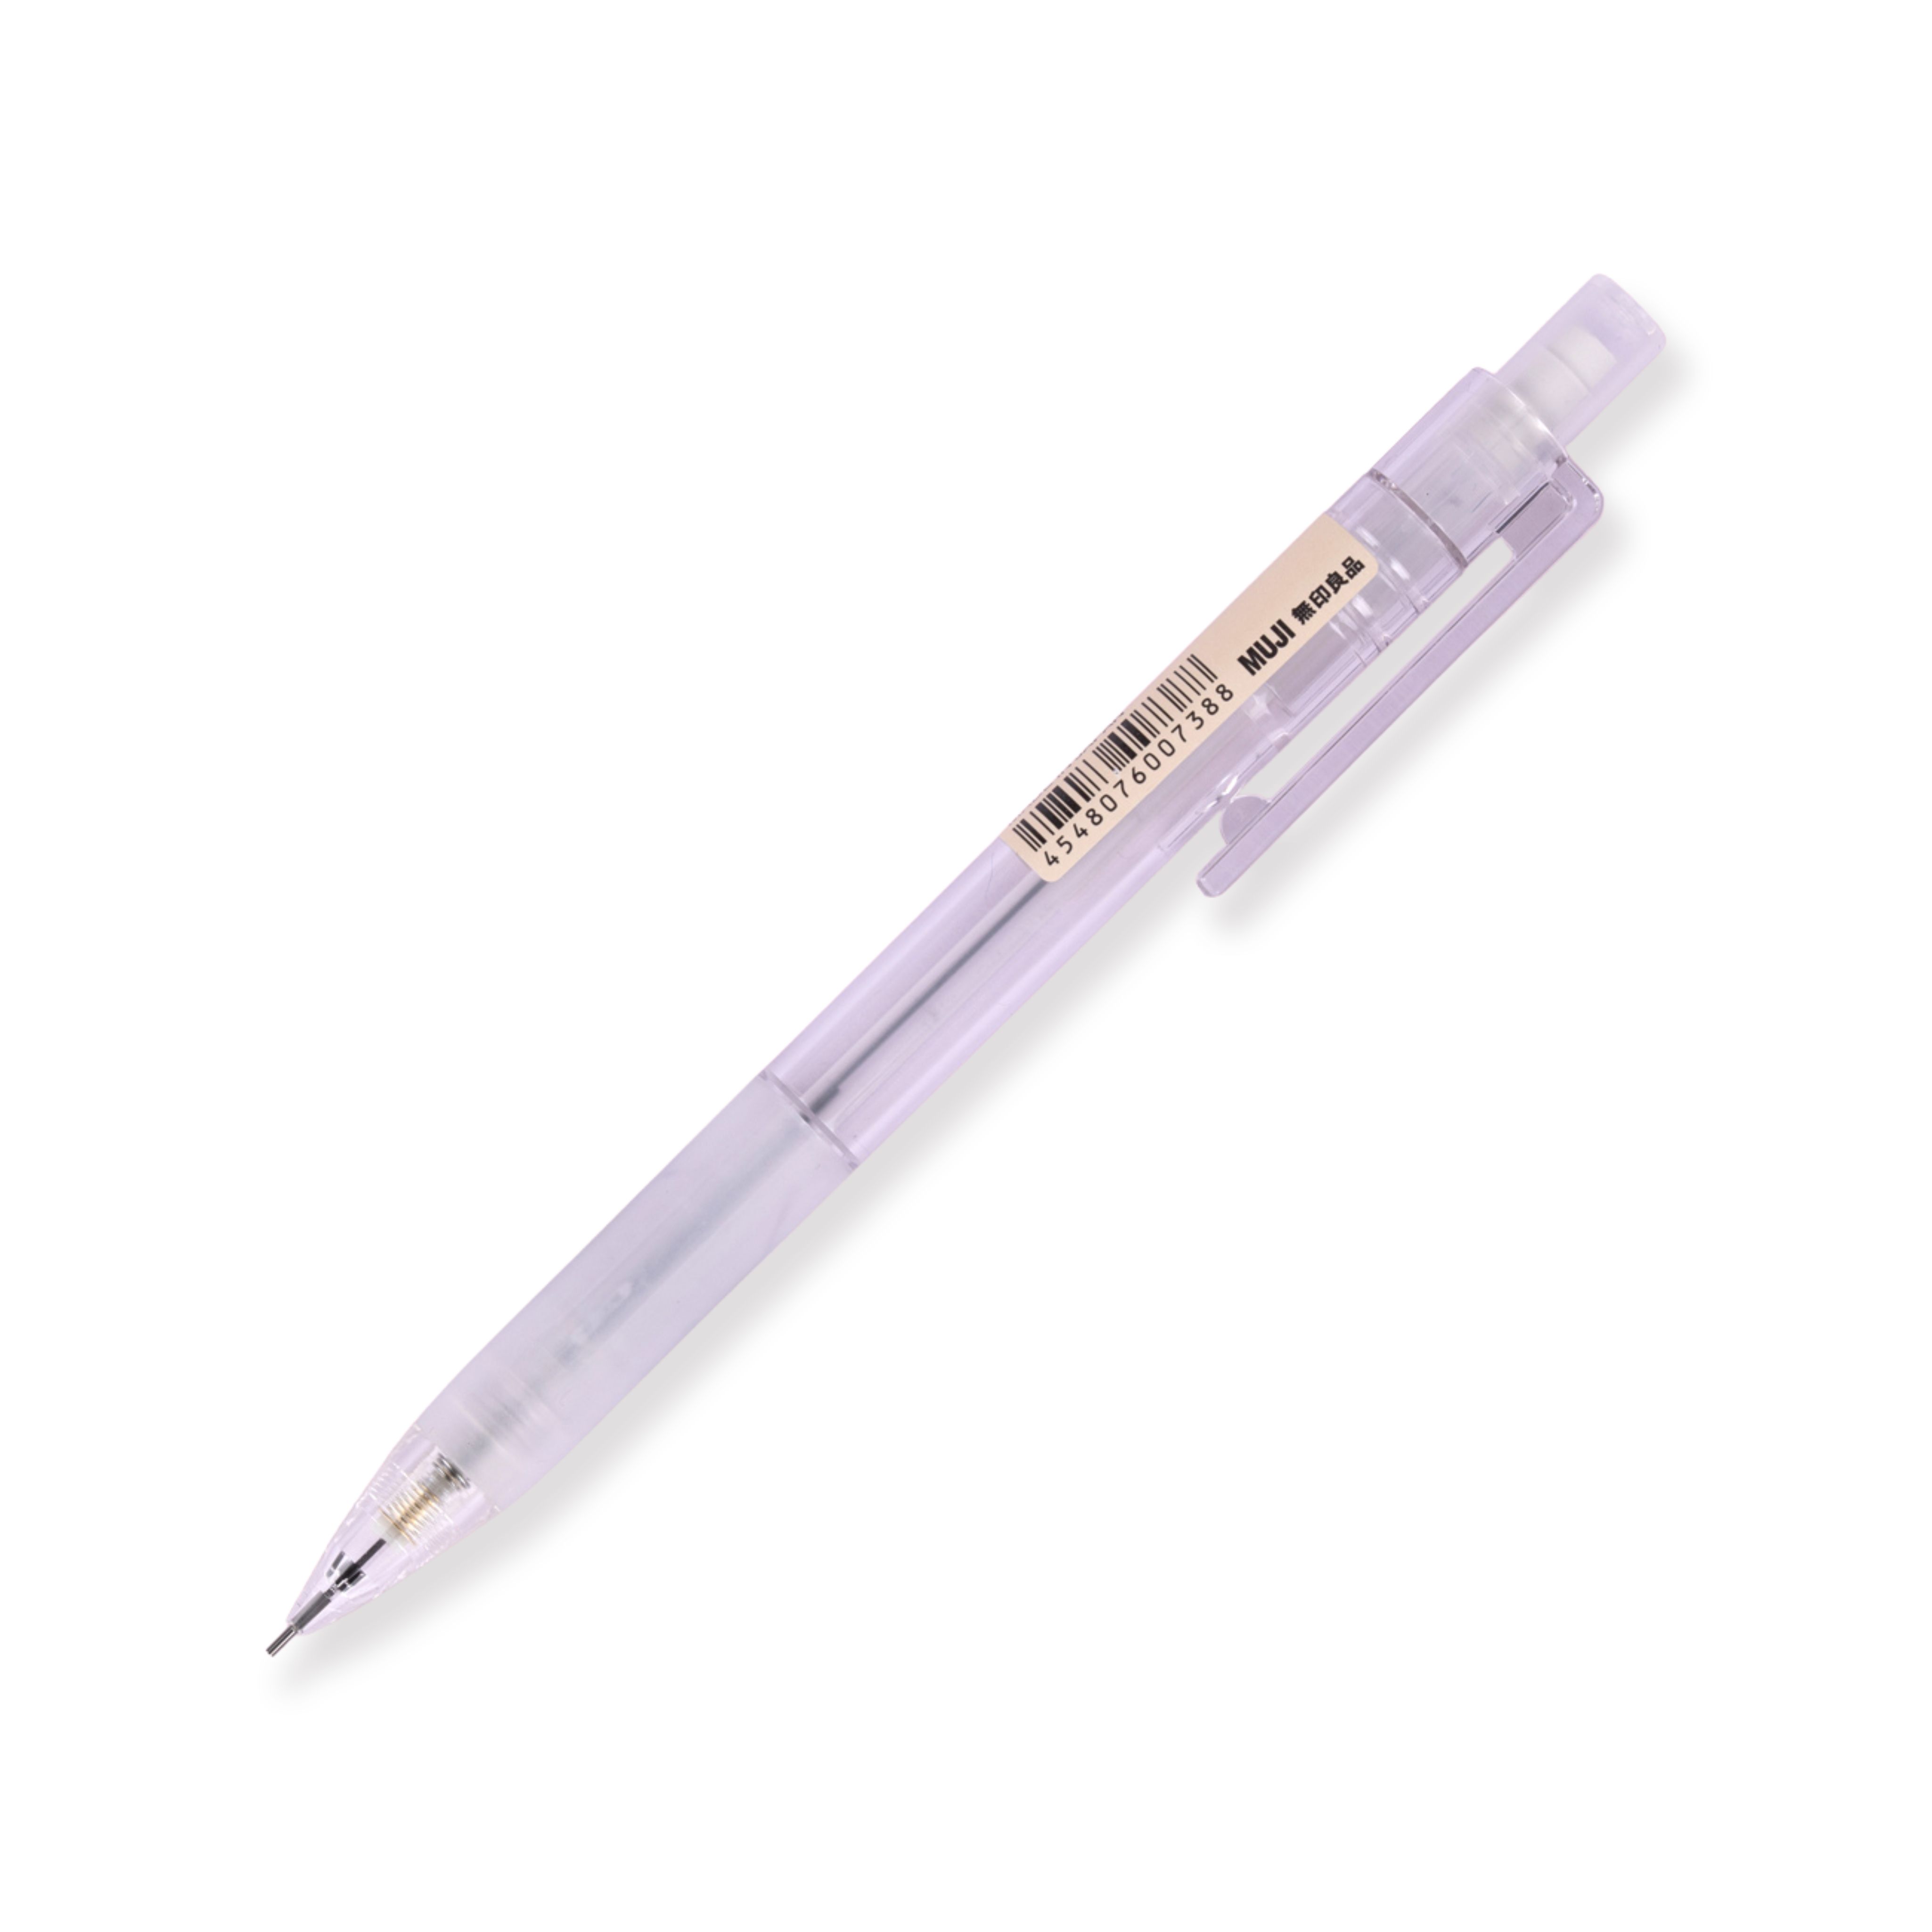 Muji Polycarbonate Sharp Pencil W/Rubber Grip 0.5 mm